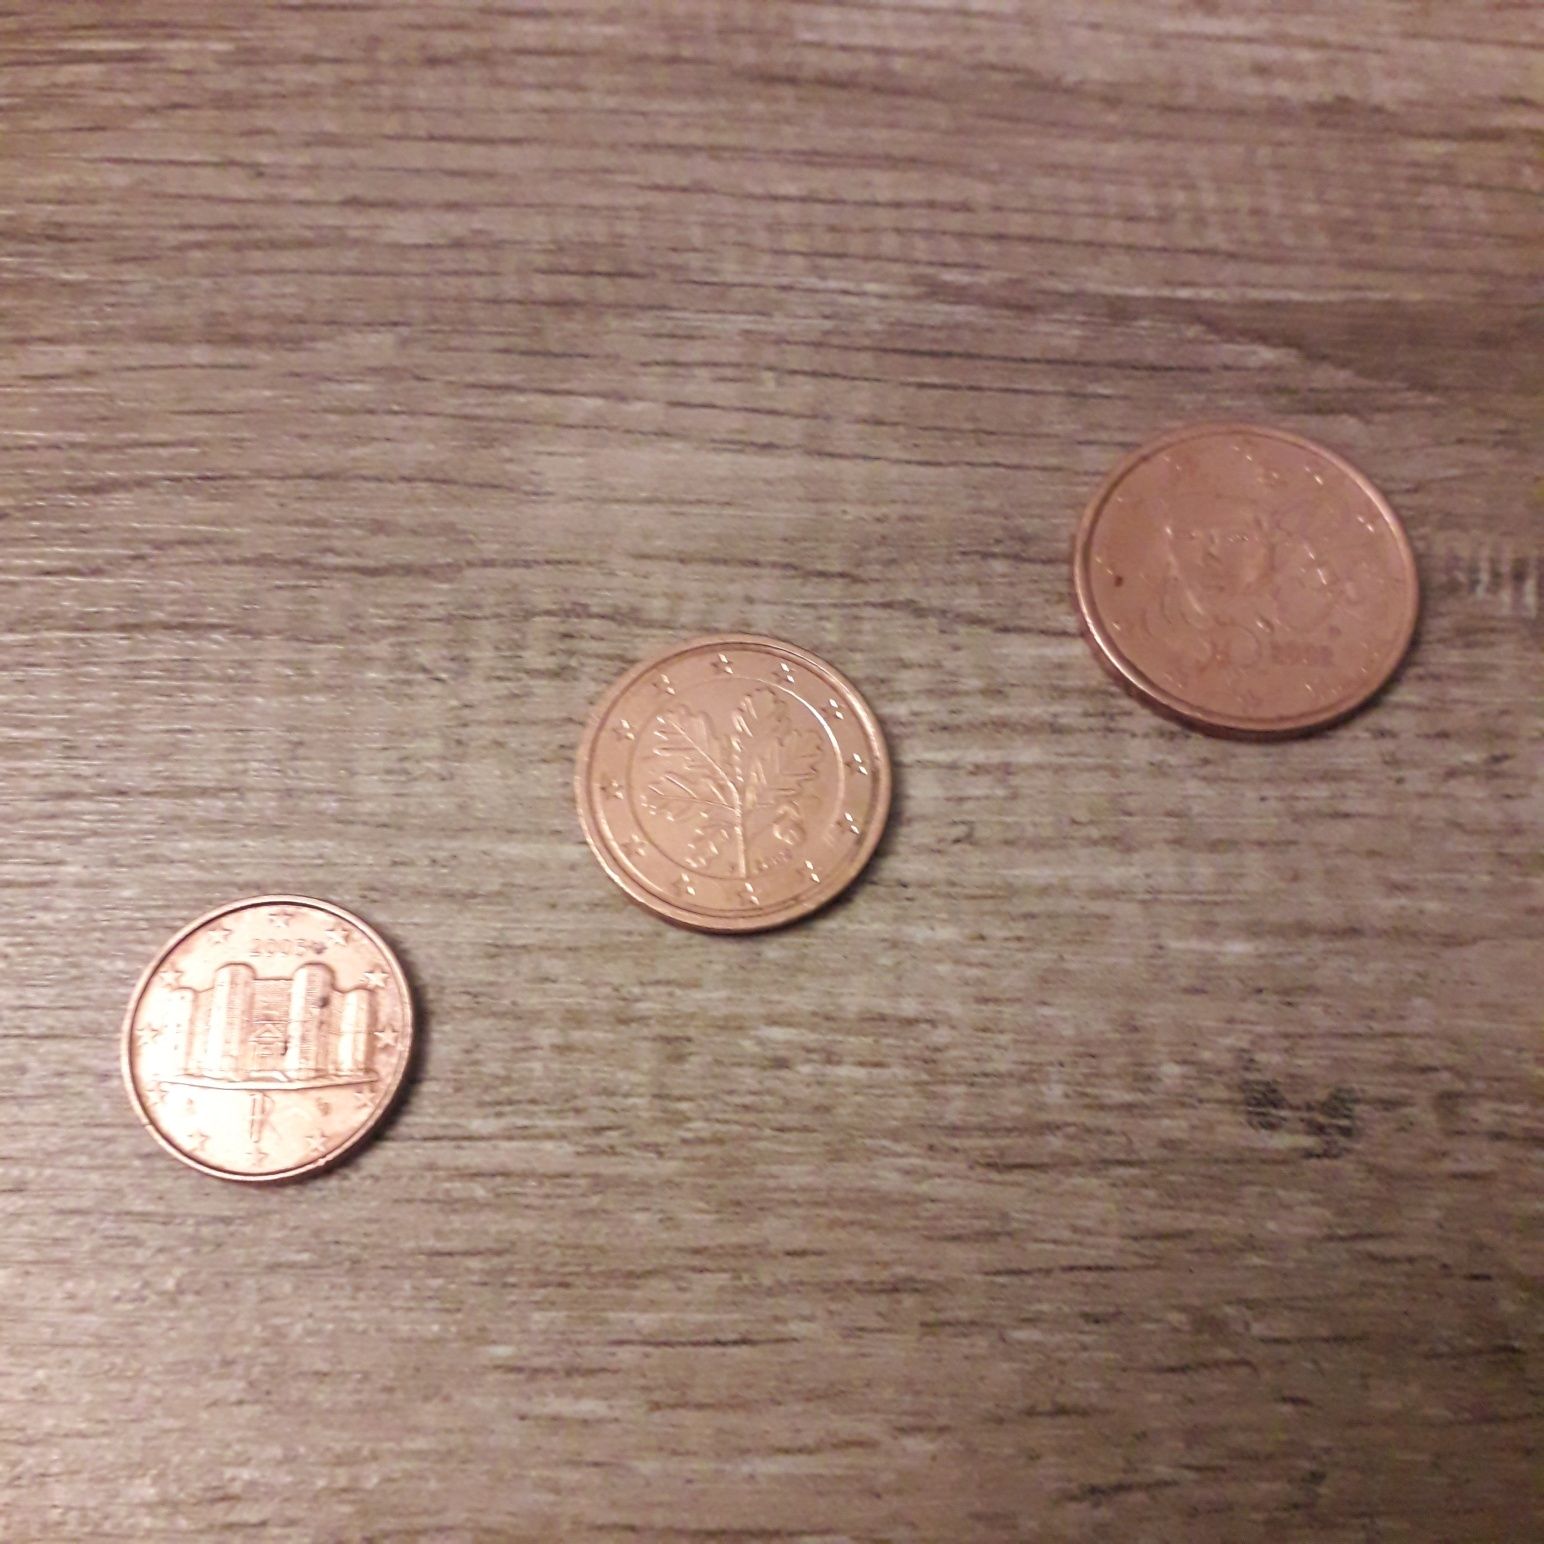 Lot monede 1, 2, 5 euro cent, anii 2000